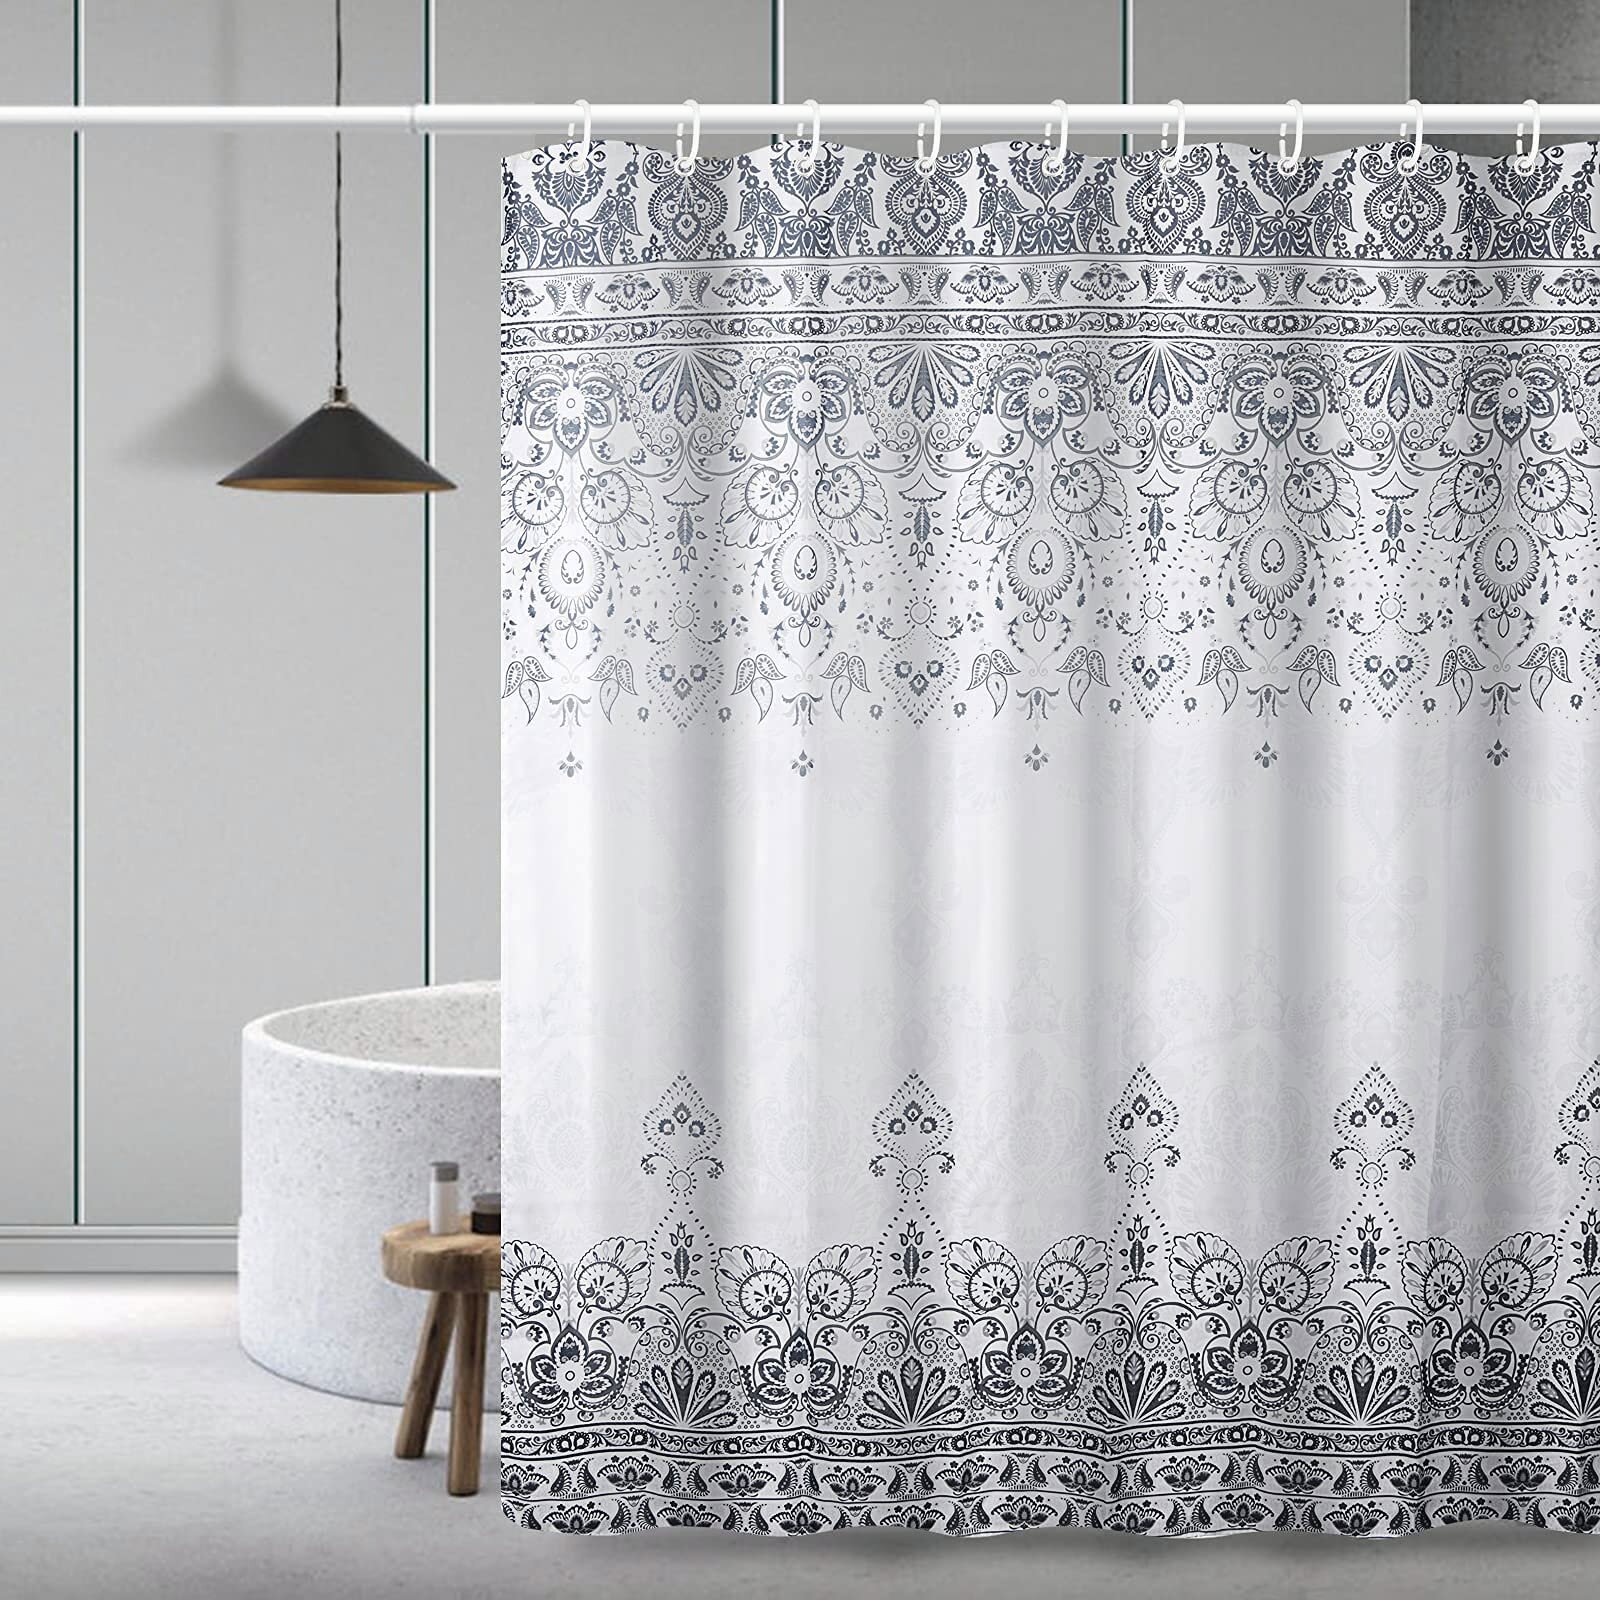 Shower Rhubarb Duck Polyester Waterproof Bathroom Fabric Shower Curtain 12 Hook 